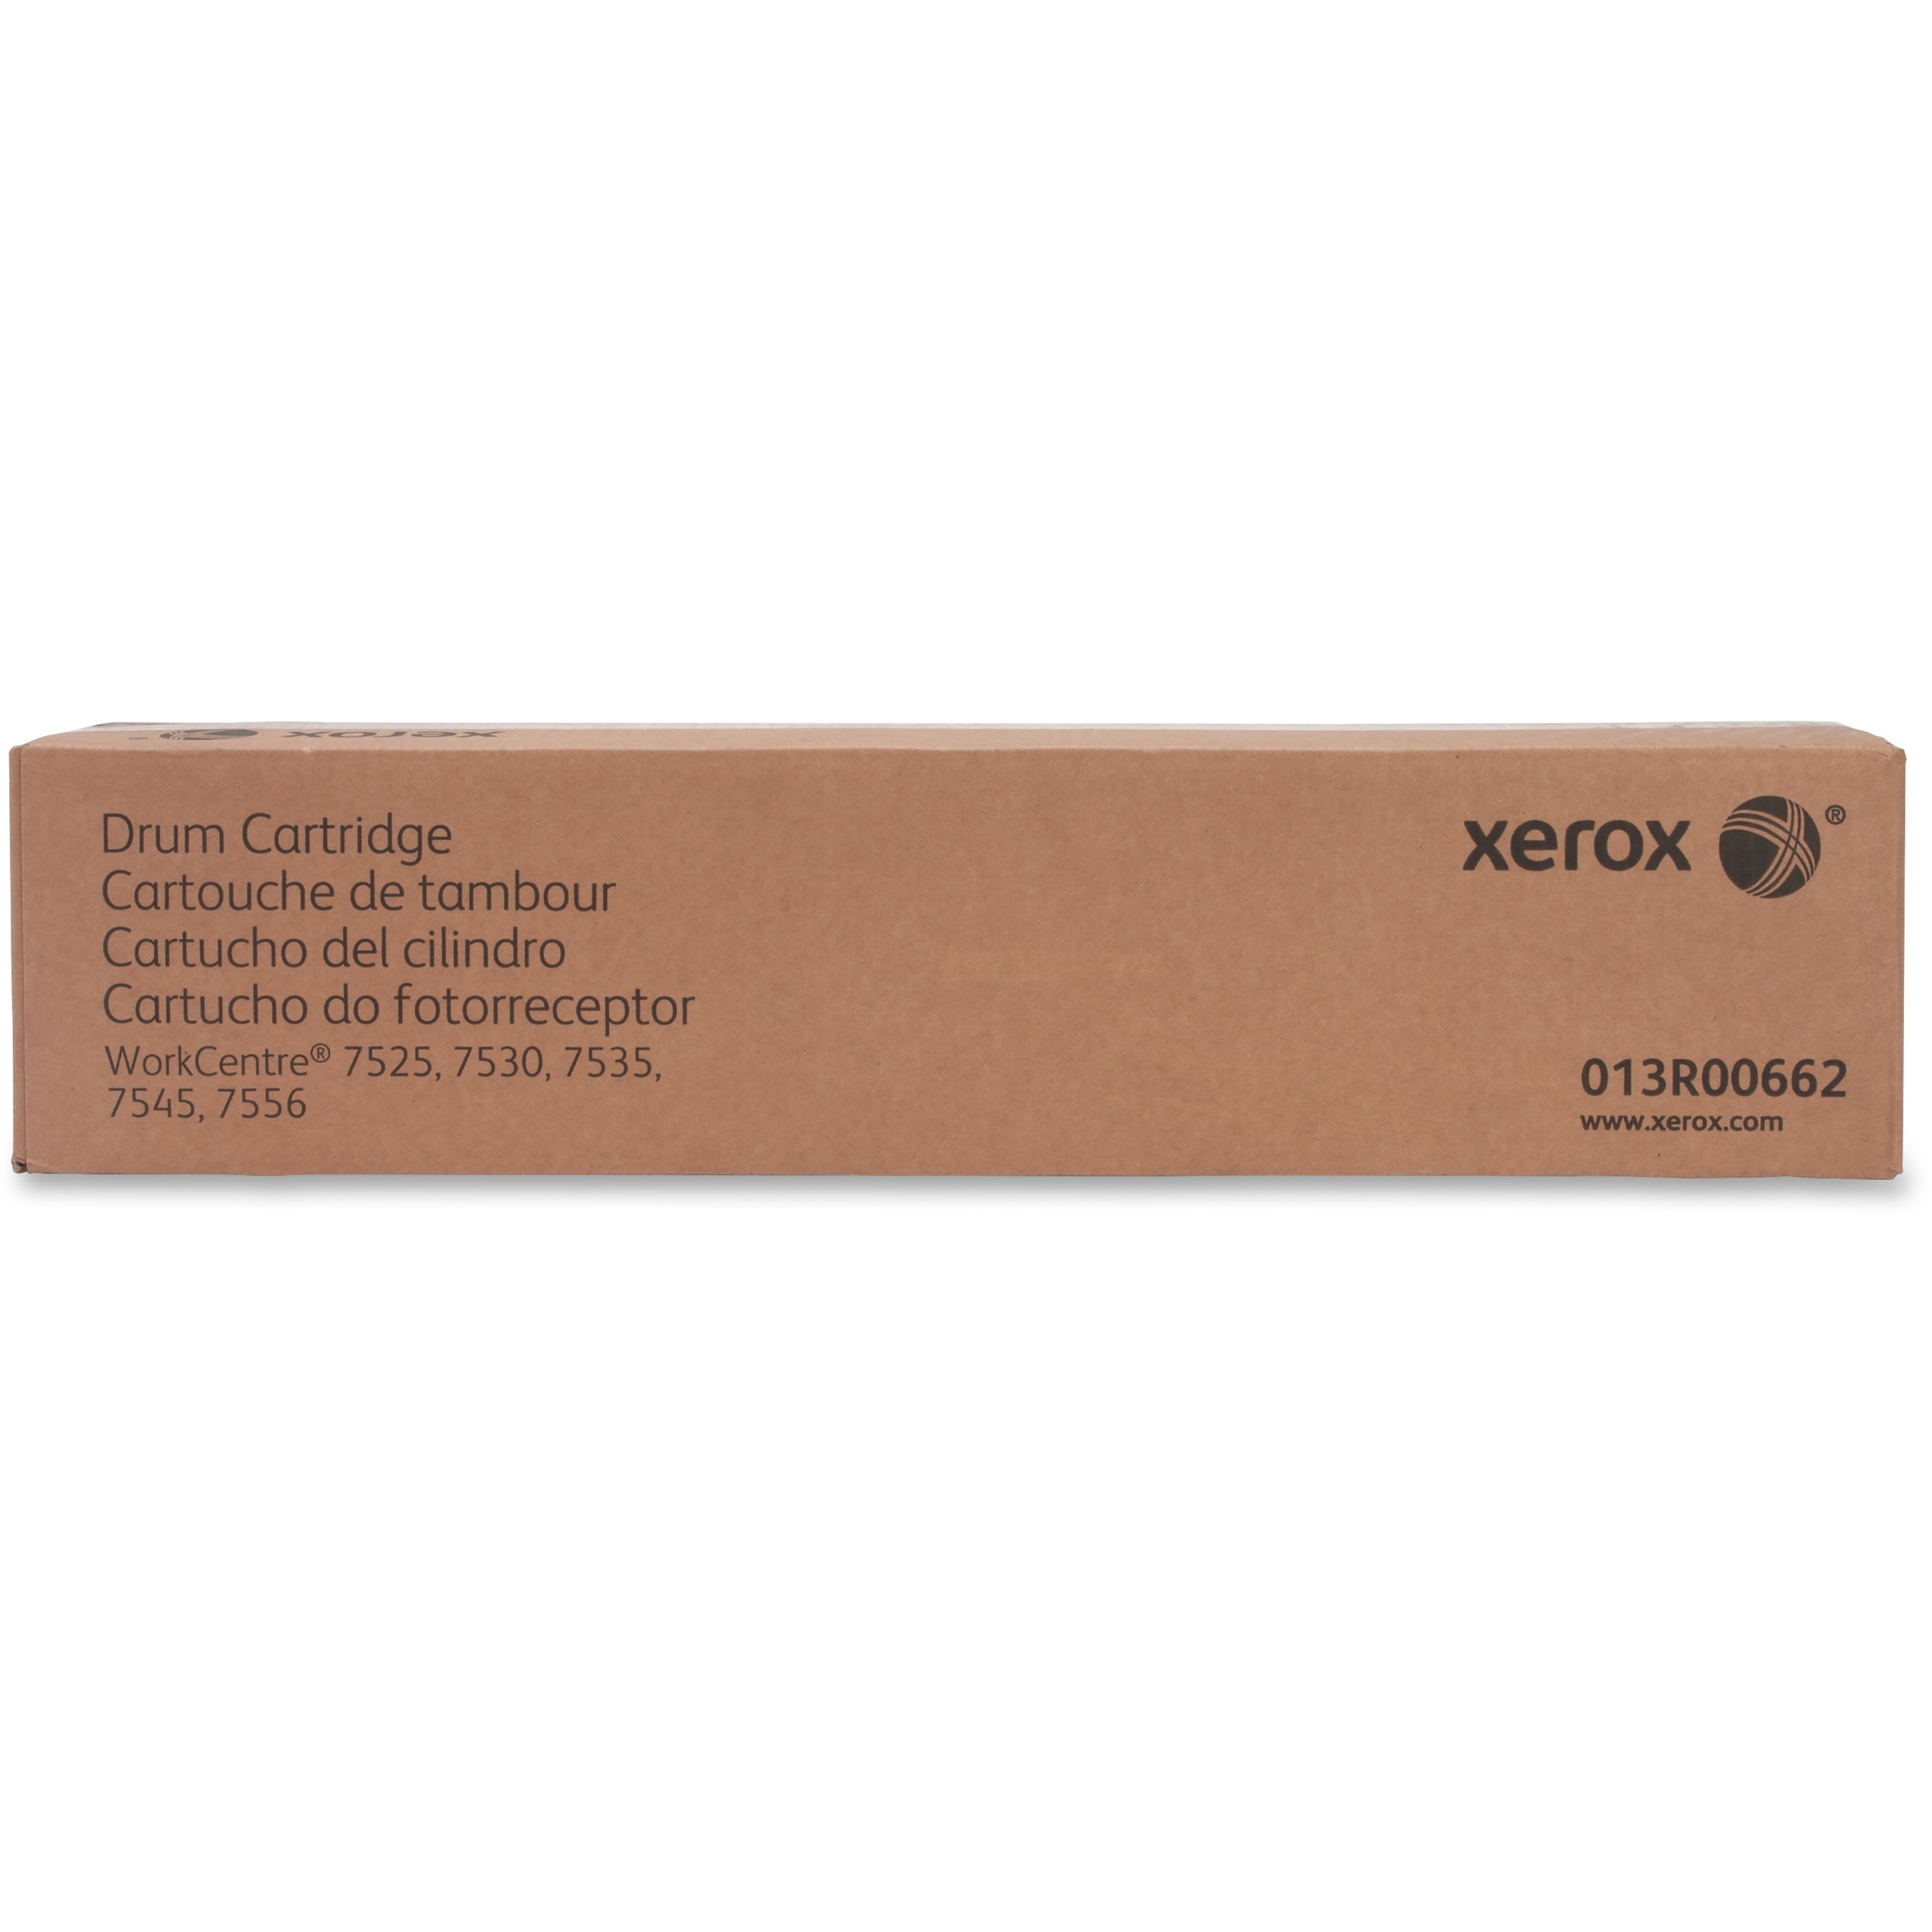 XEROX-013R00662